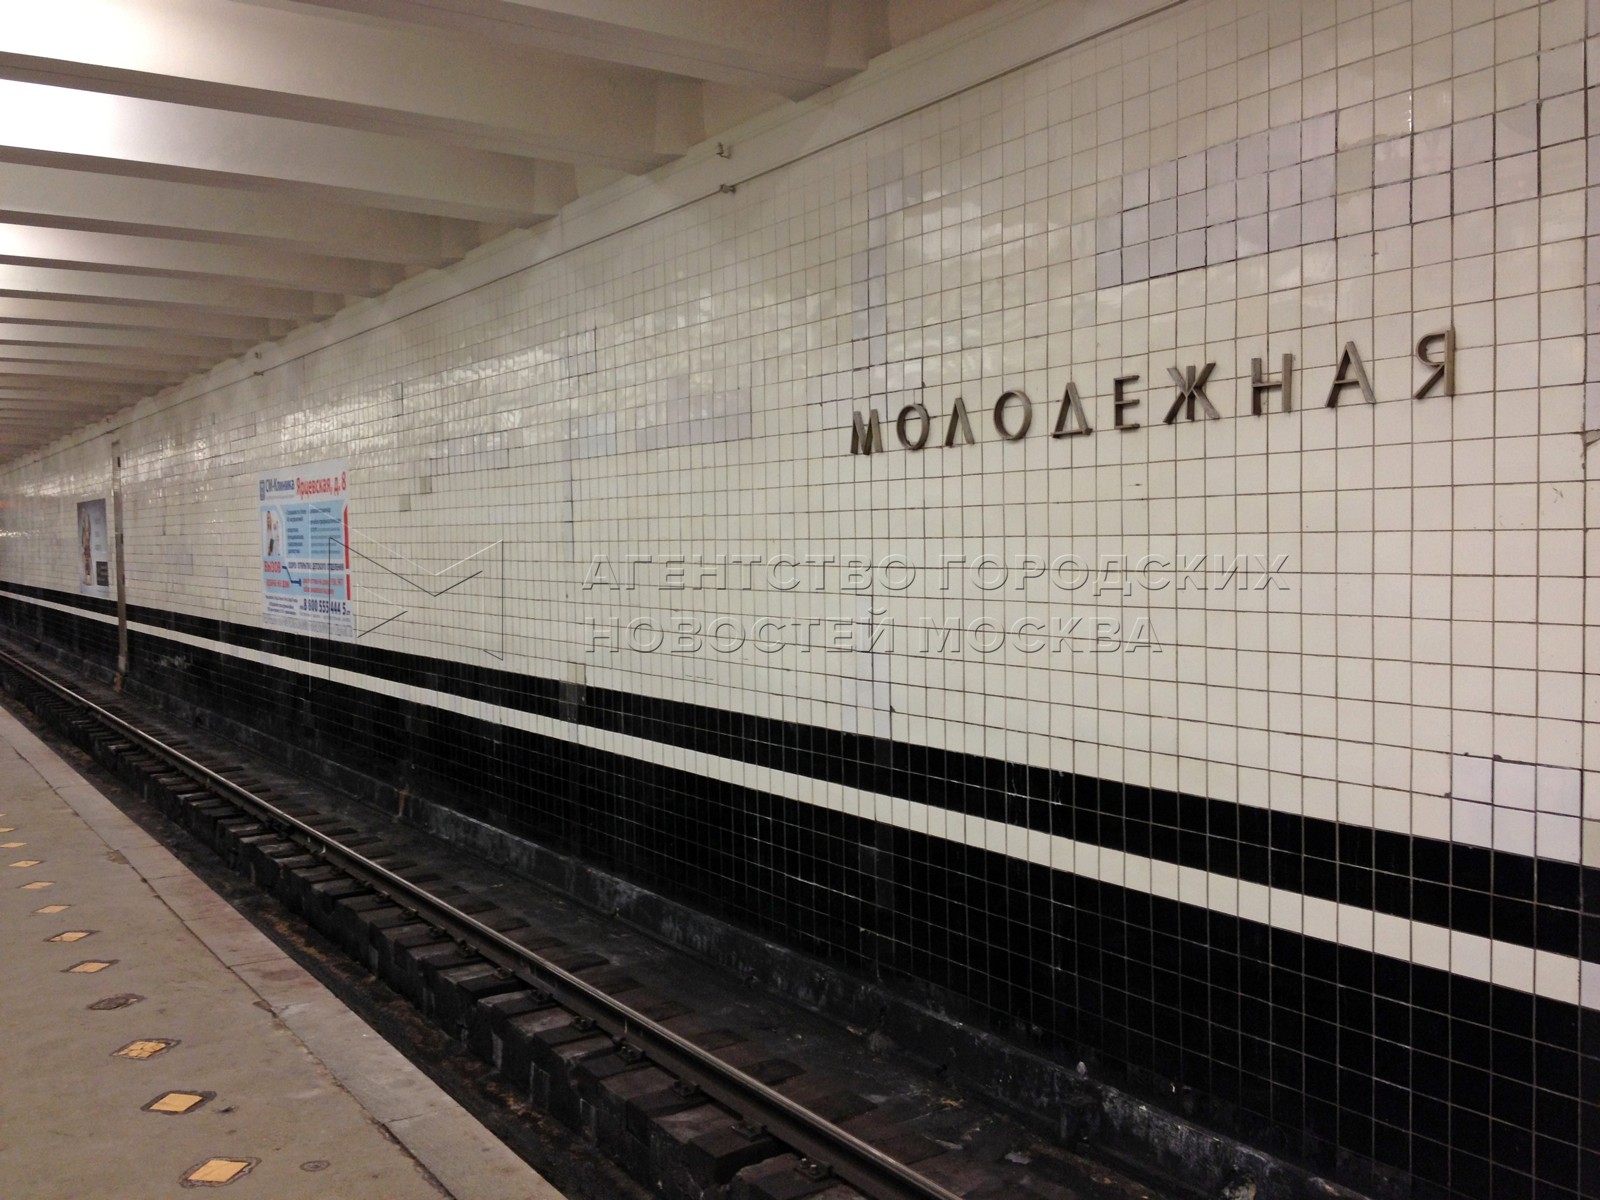 метро молодежная на